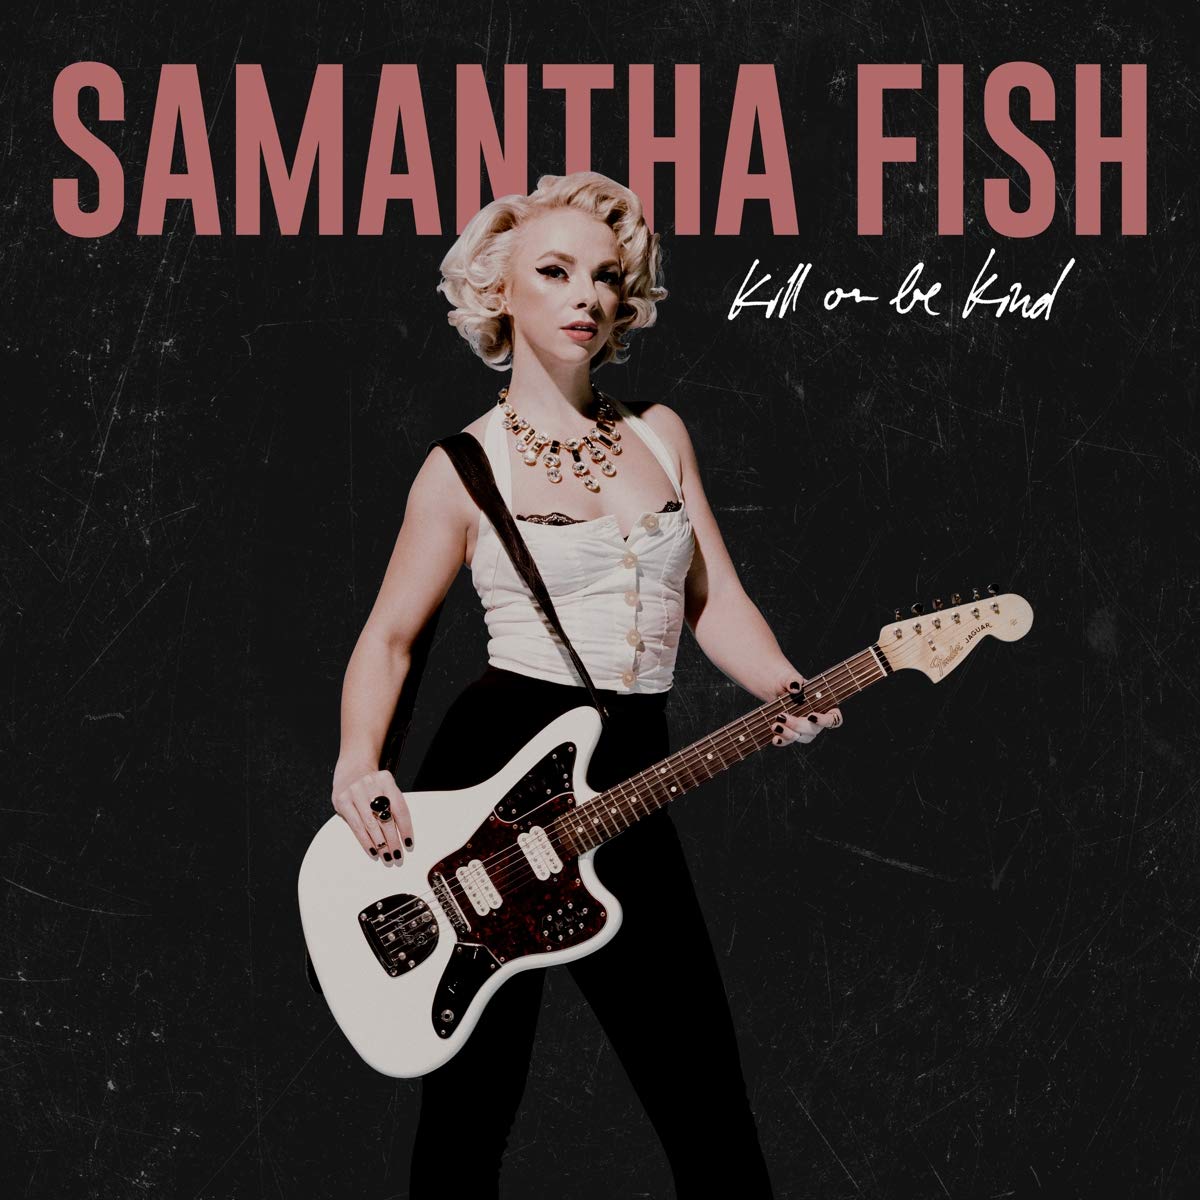 Samantha Fish - Kill Or Be Kind (Vinyl LP)